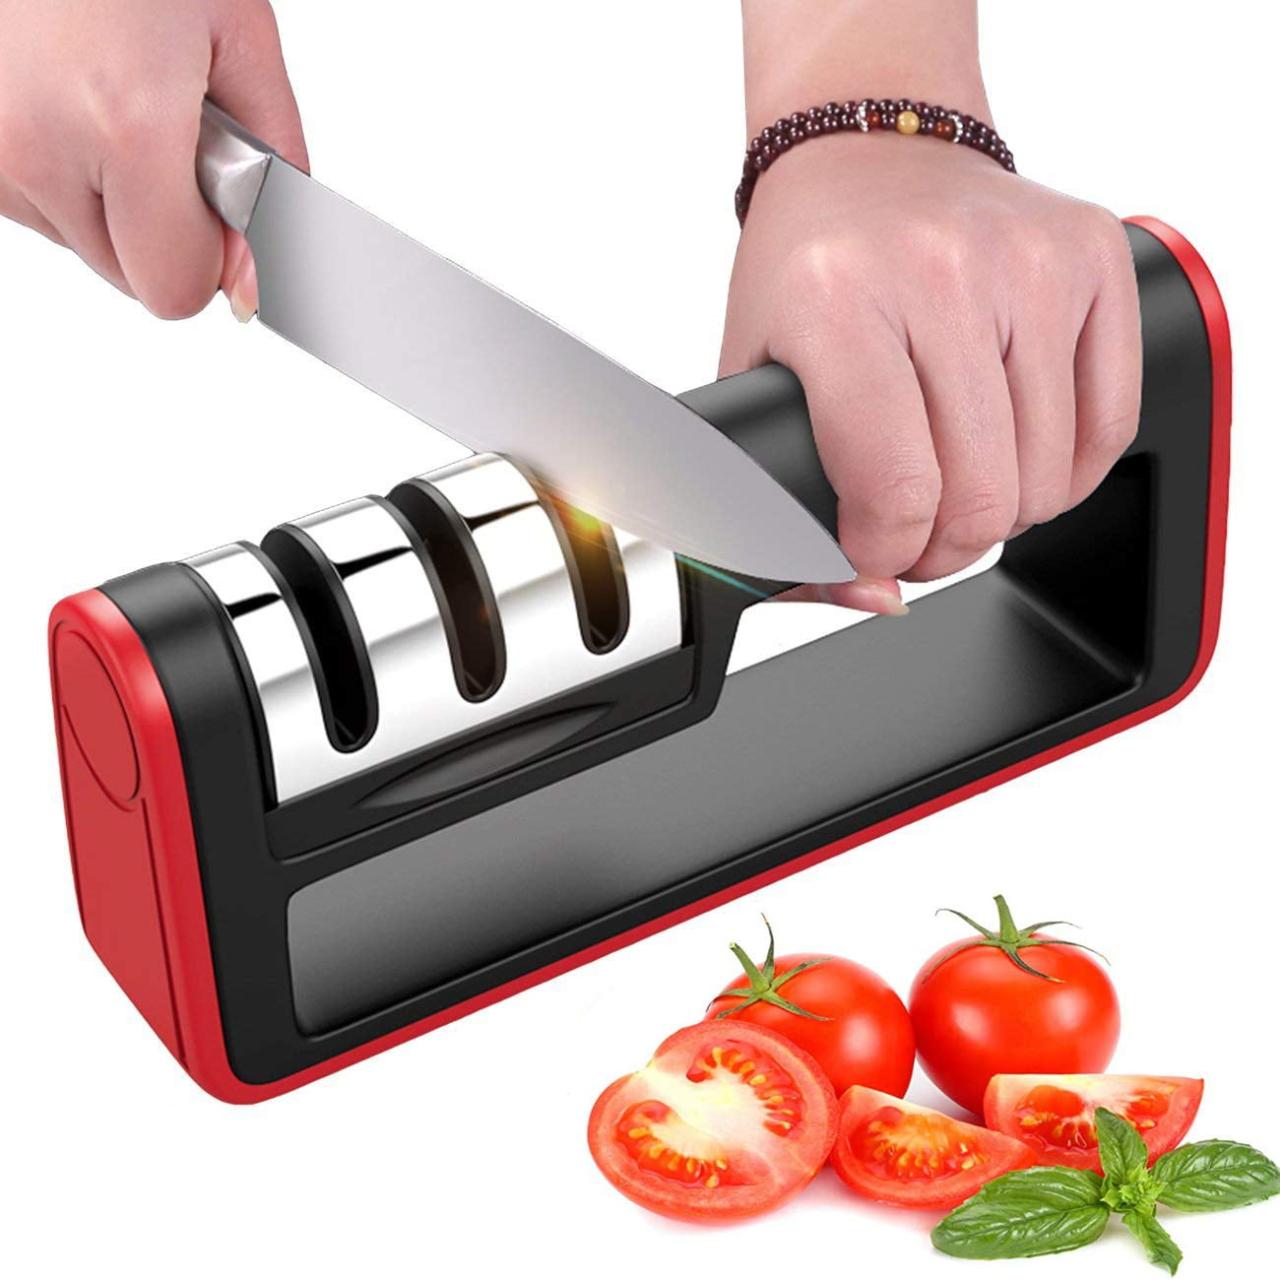 Kitchen knife sharpener